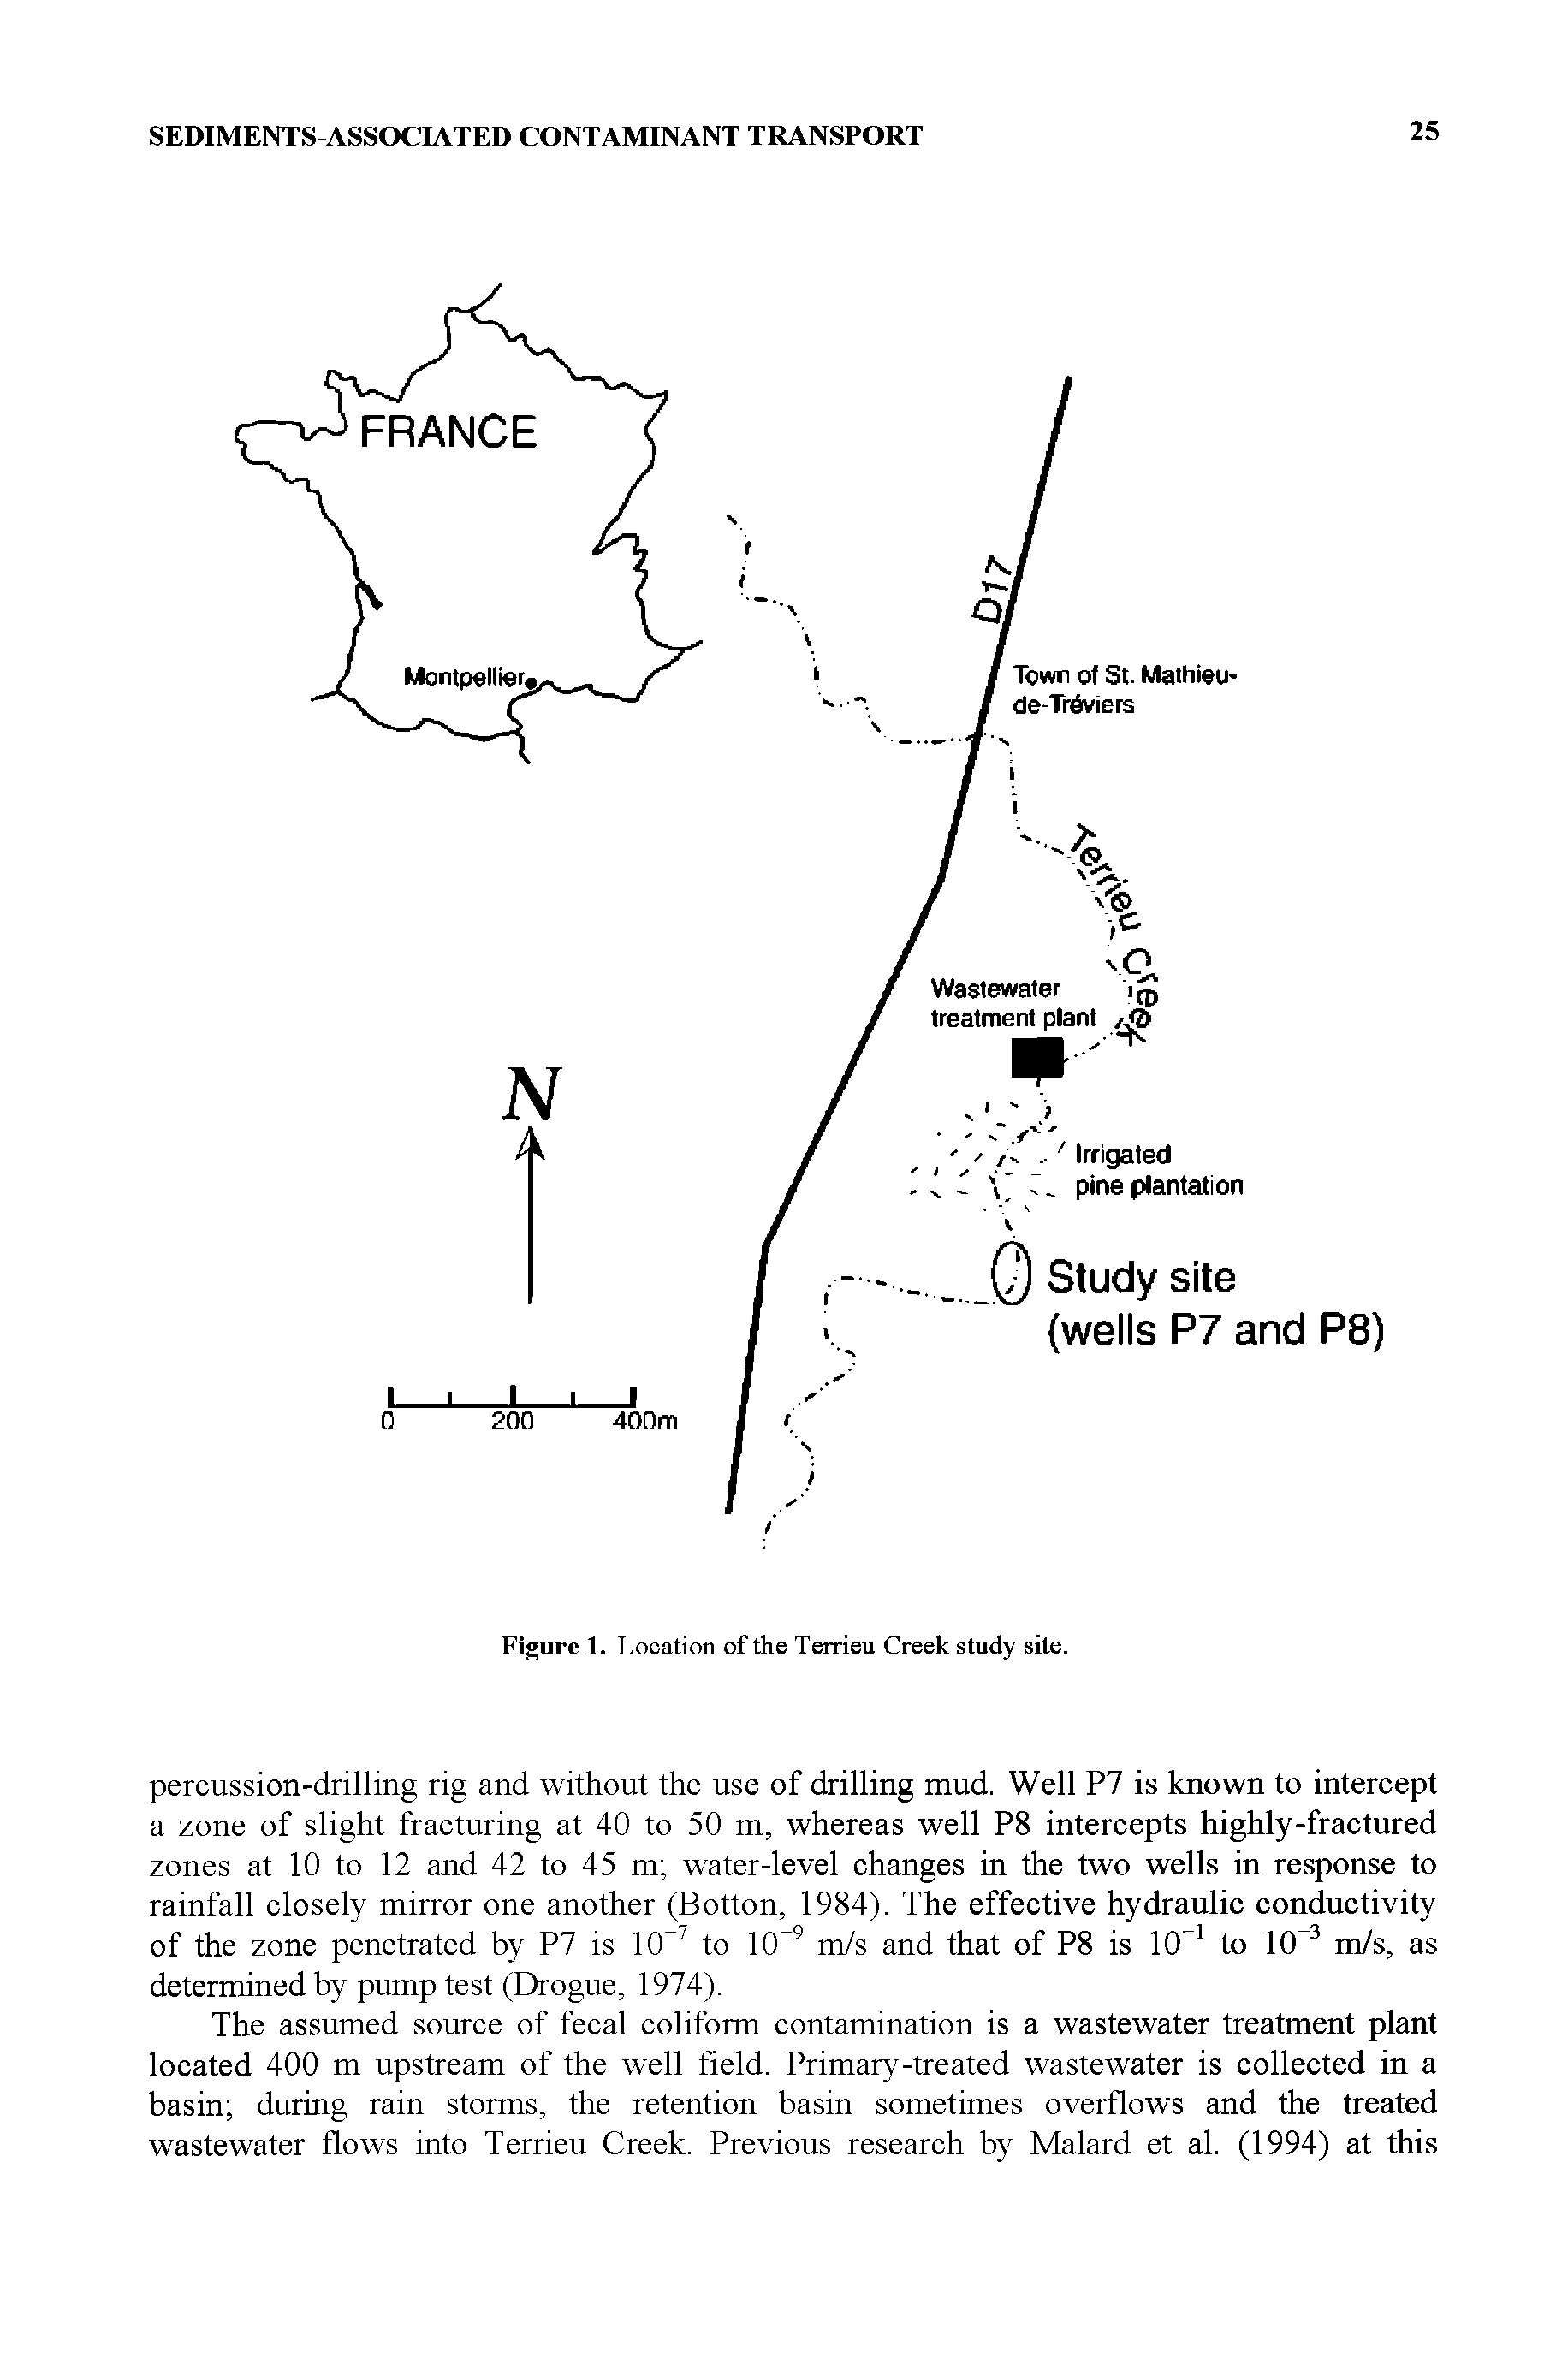 Figure 1. Location of the Terrieu Creek study site.